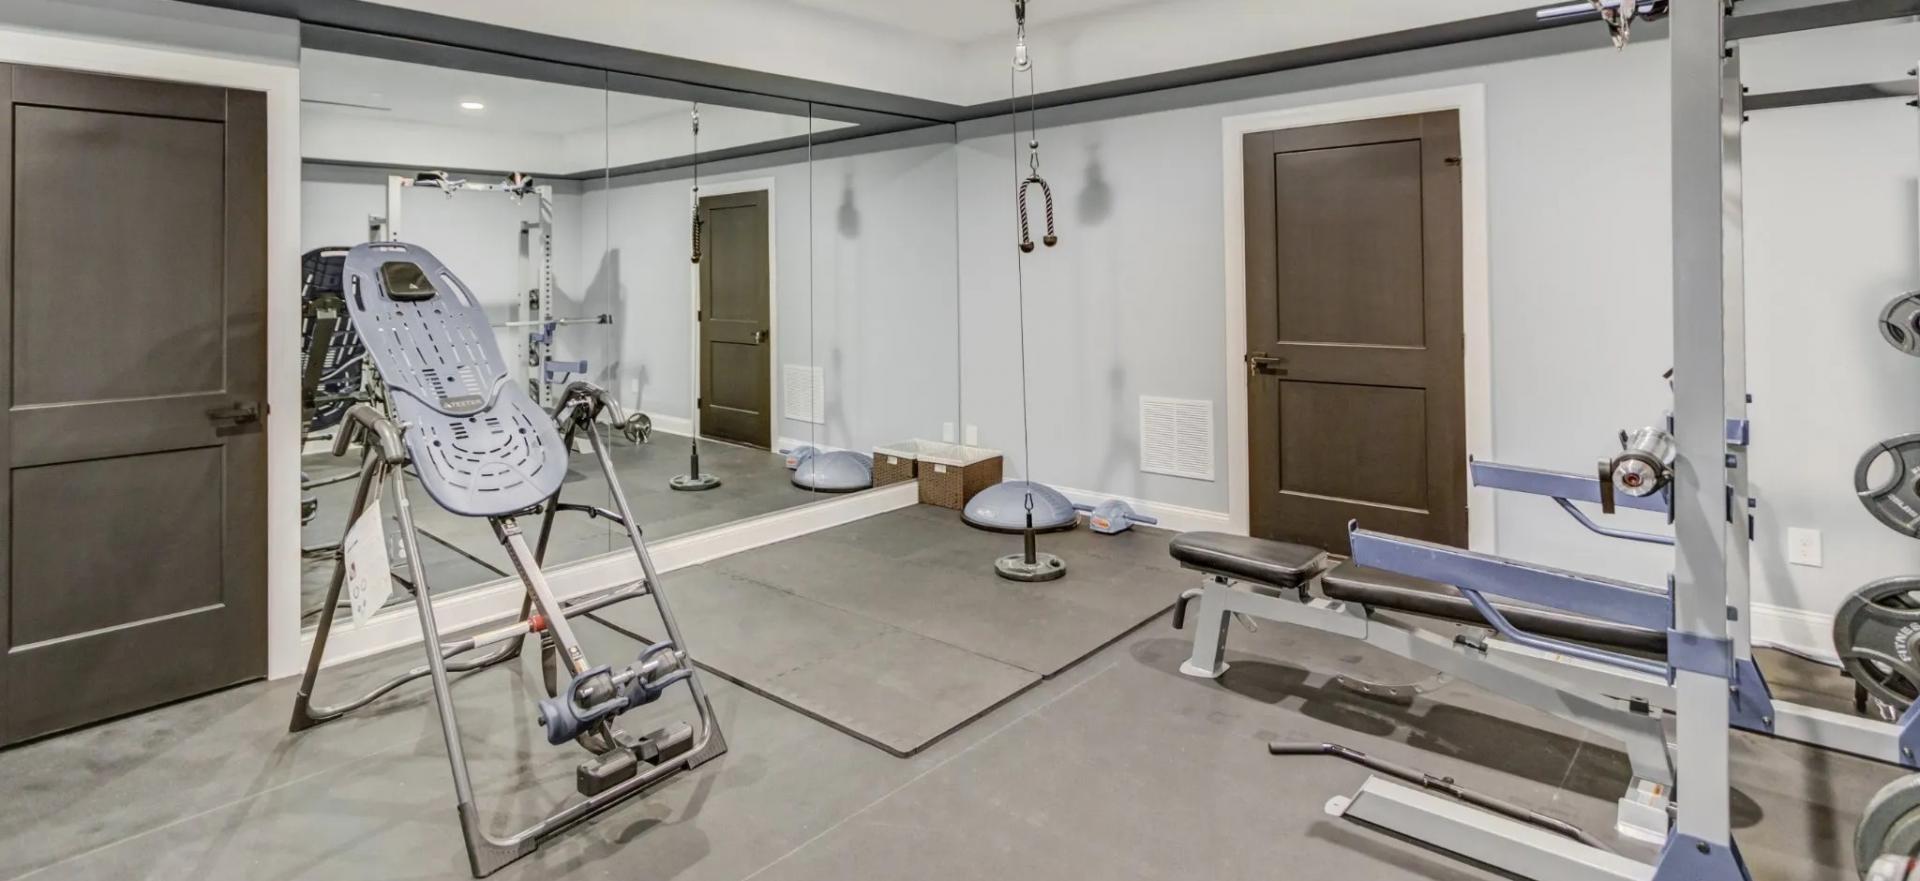 basement transformed into home gym 